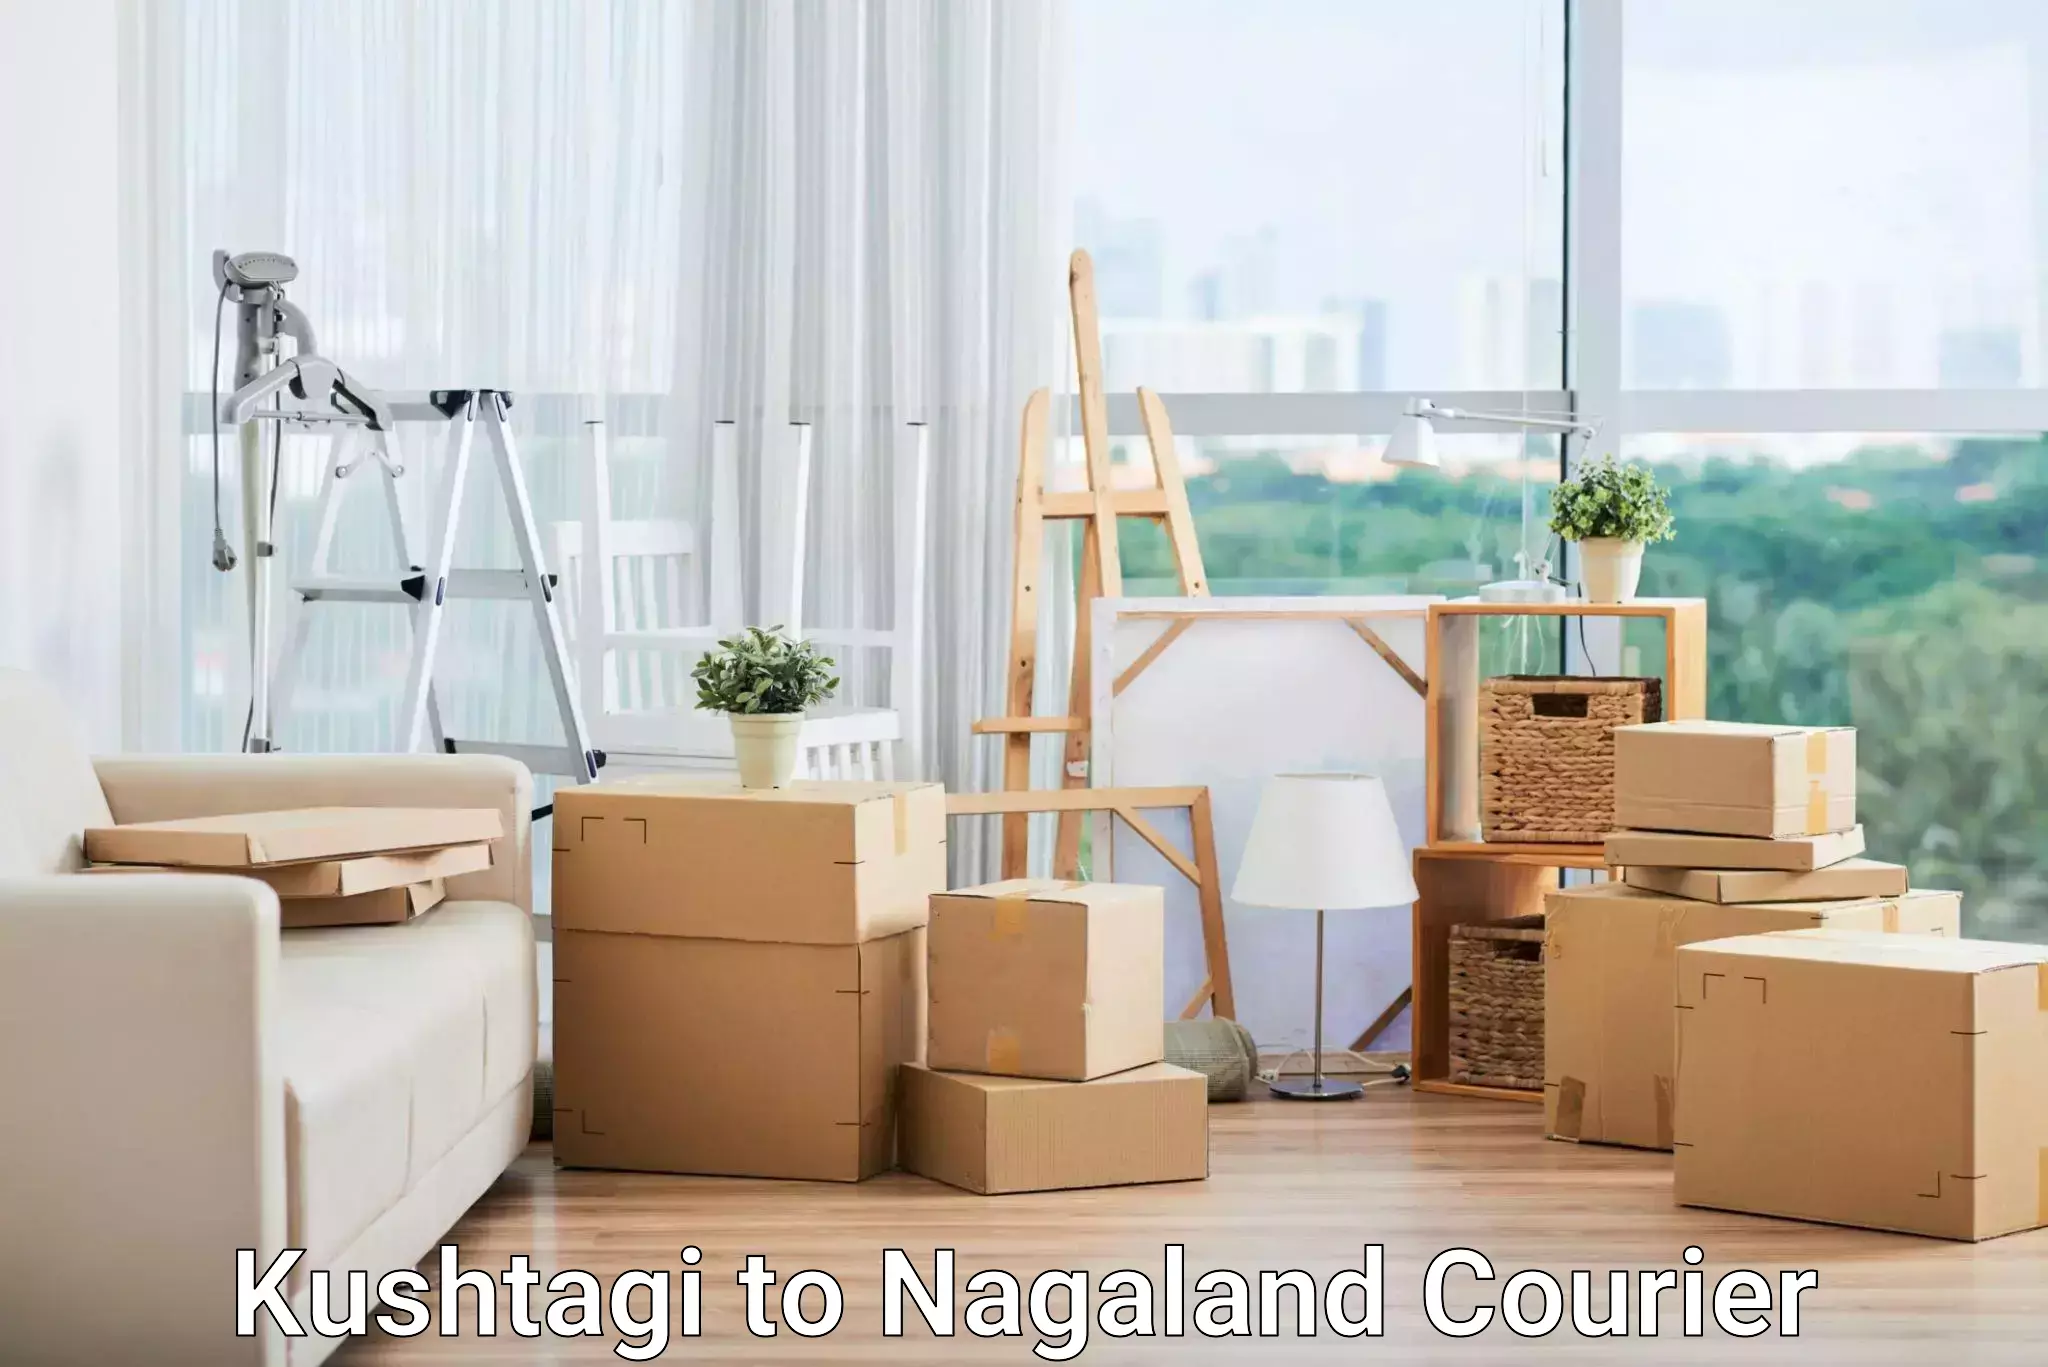 High value parcel delivery in Kushtagi to Nagaland